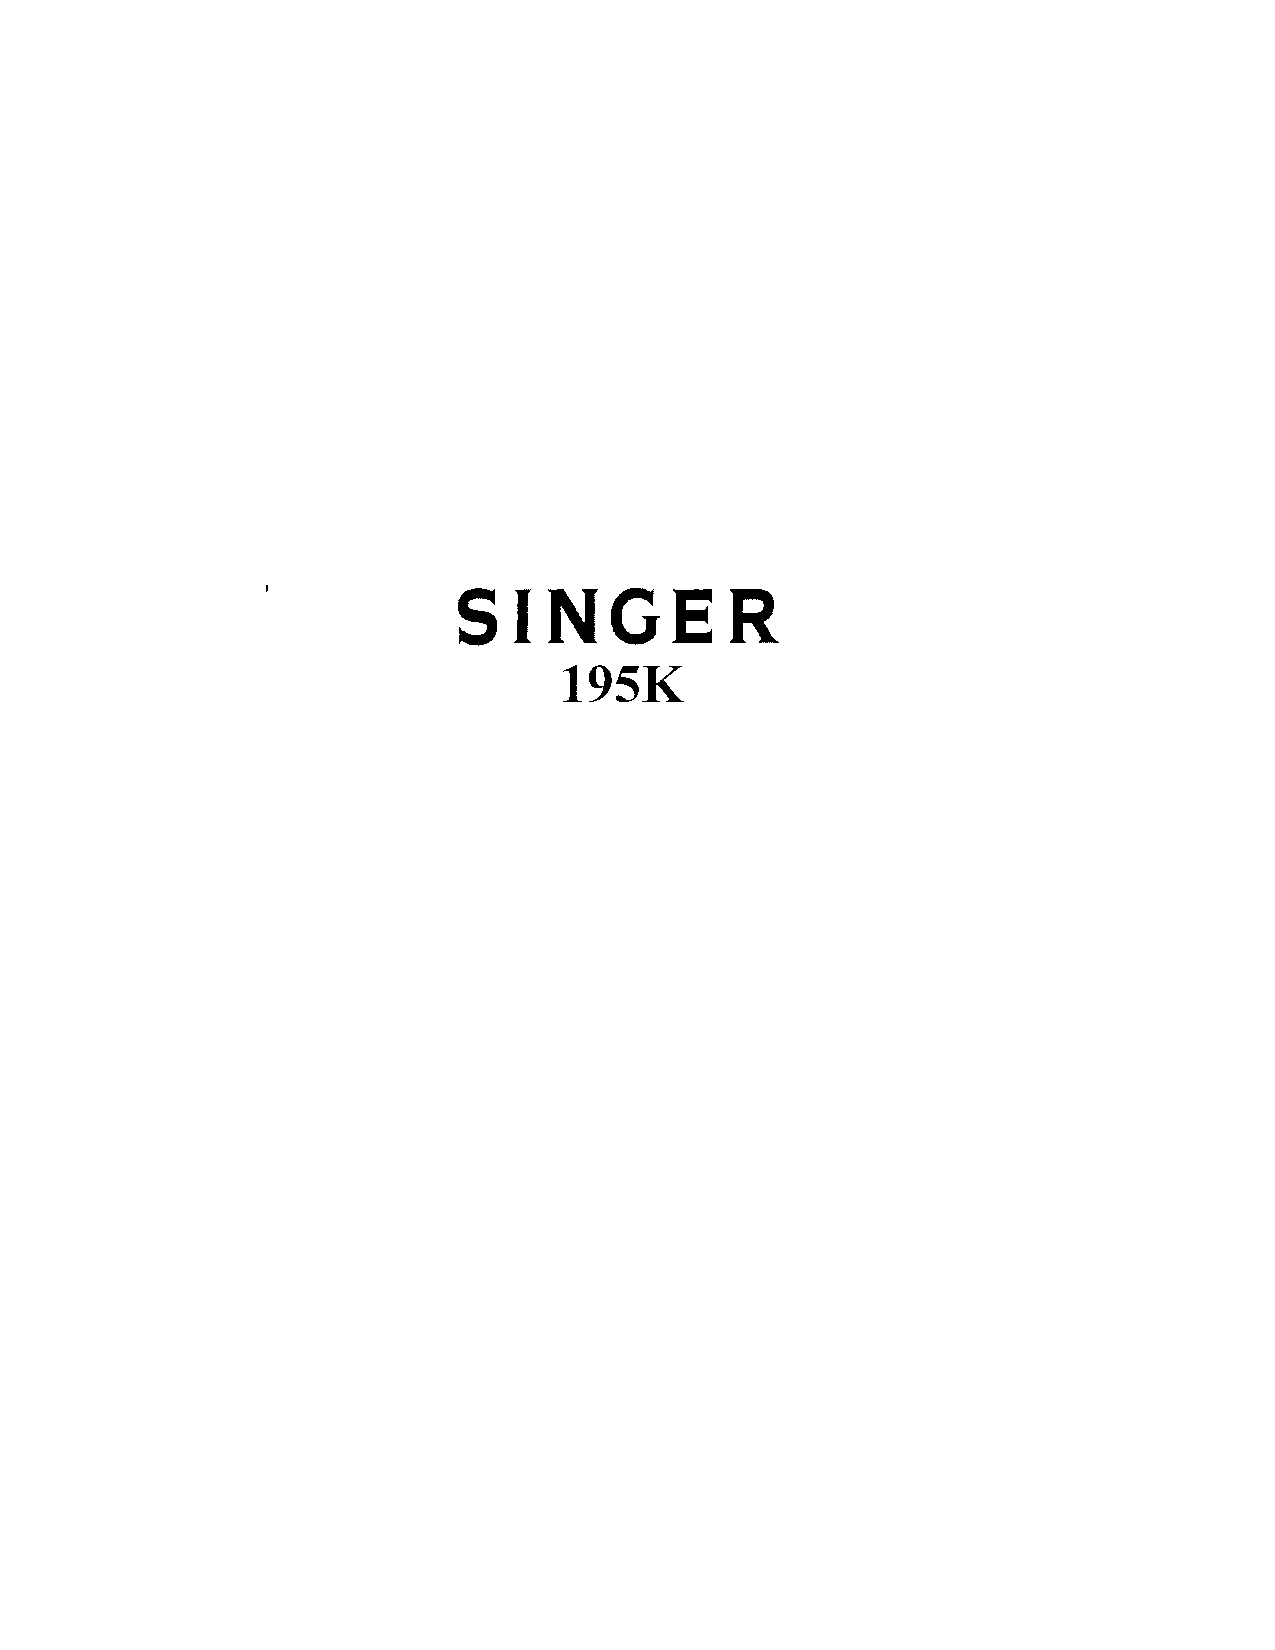 Singer 195K User Manual